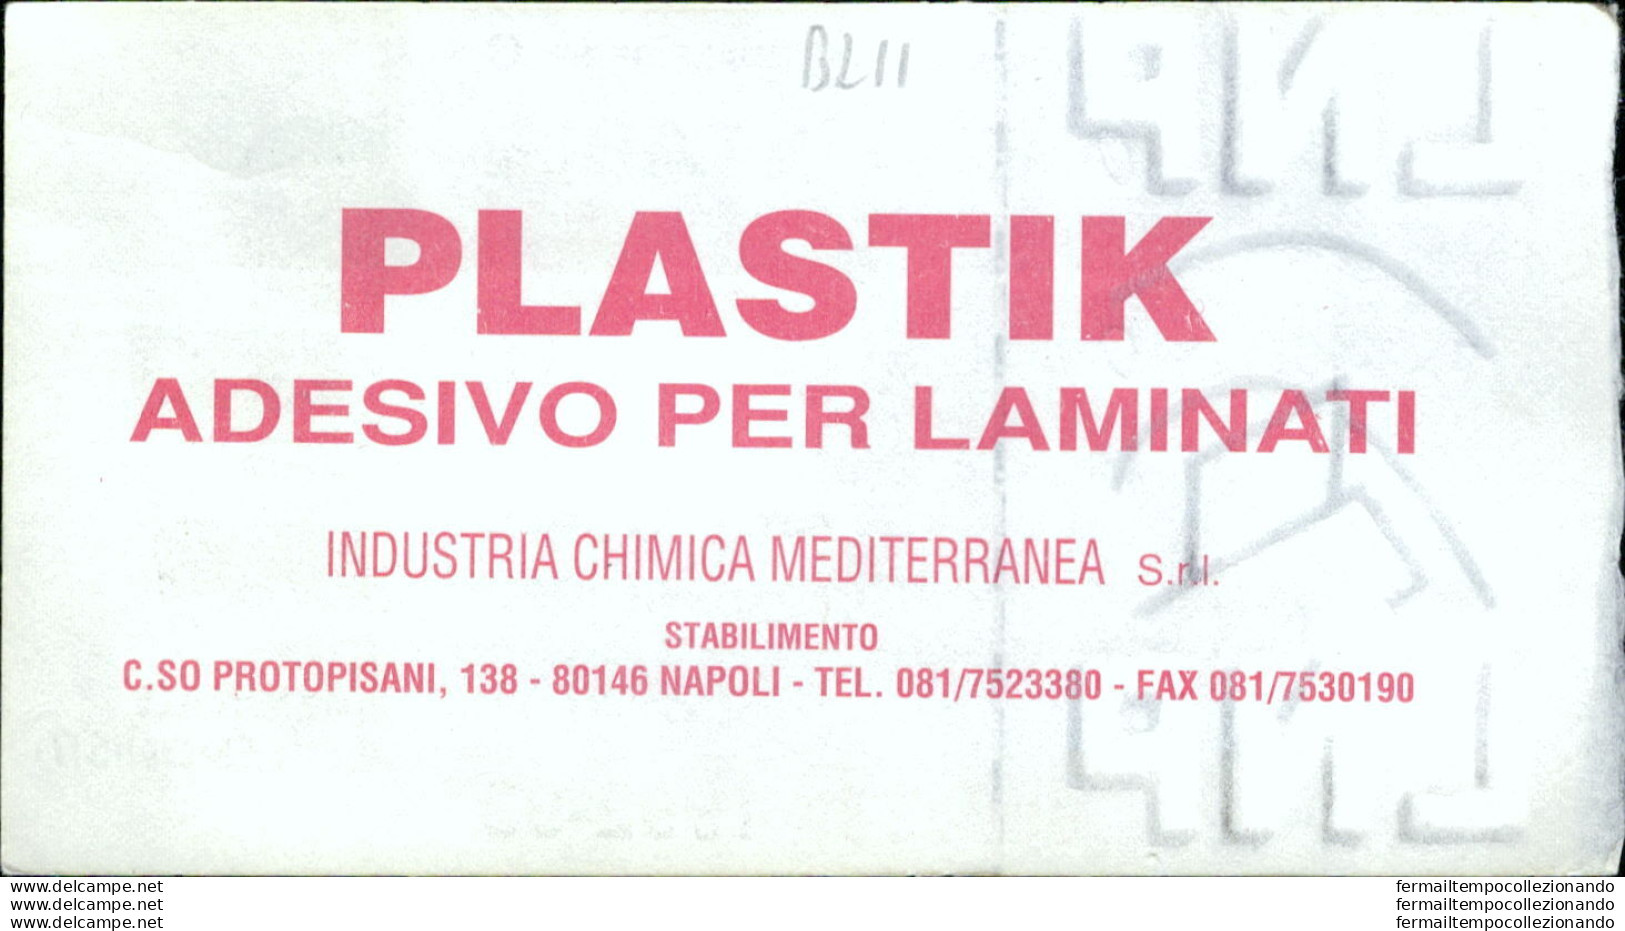 Bl11 Biglietto Calcio Ticket Juve Stabia - Monopoli 1992-1993 - Toegangskaarten